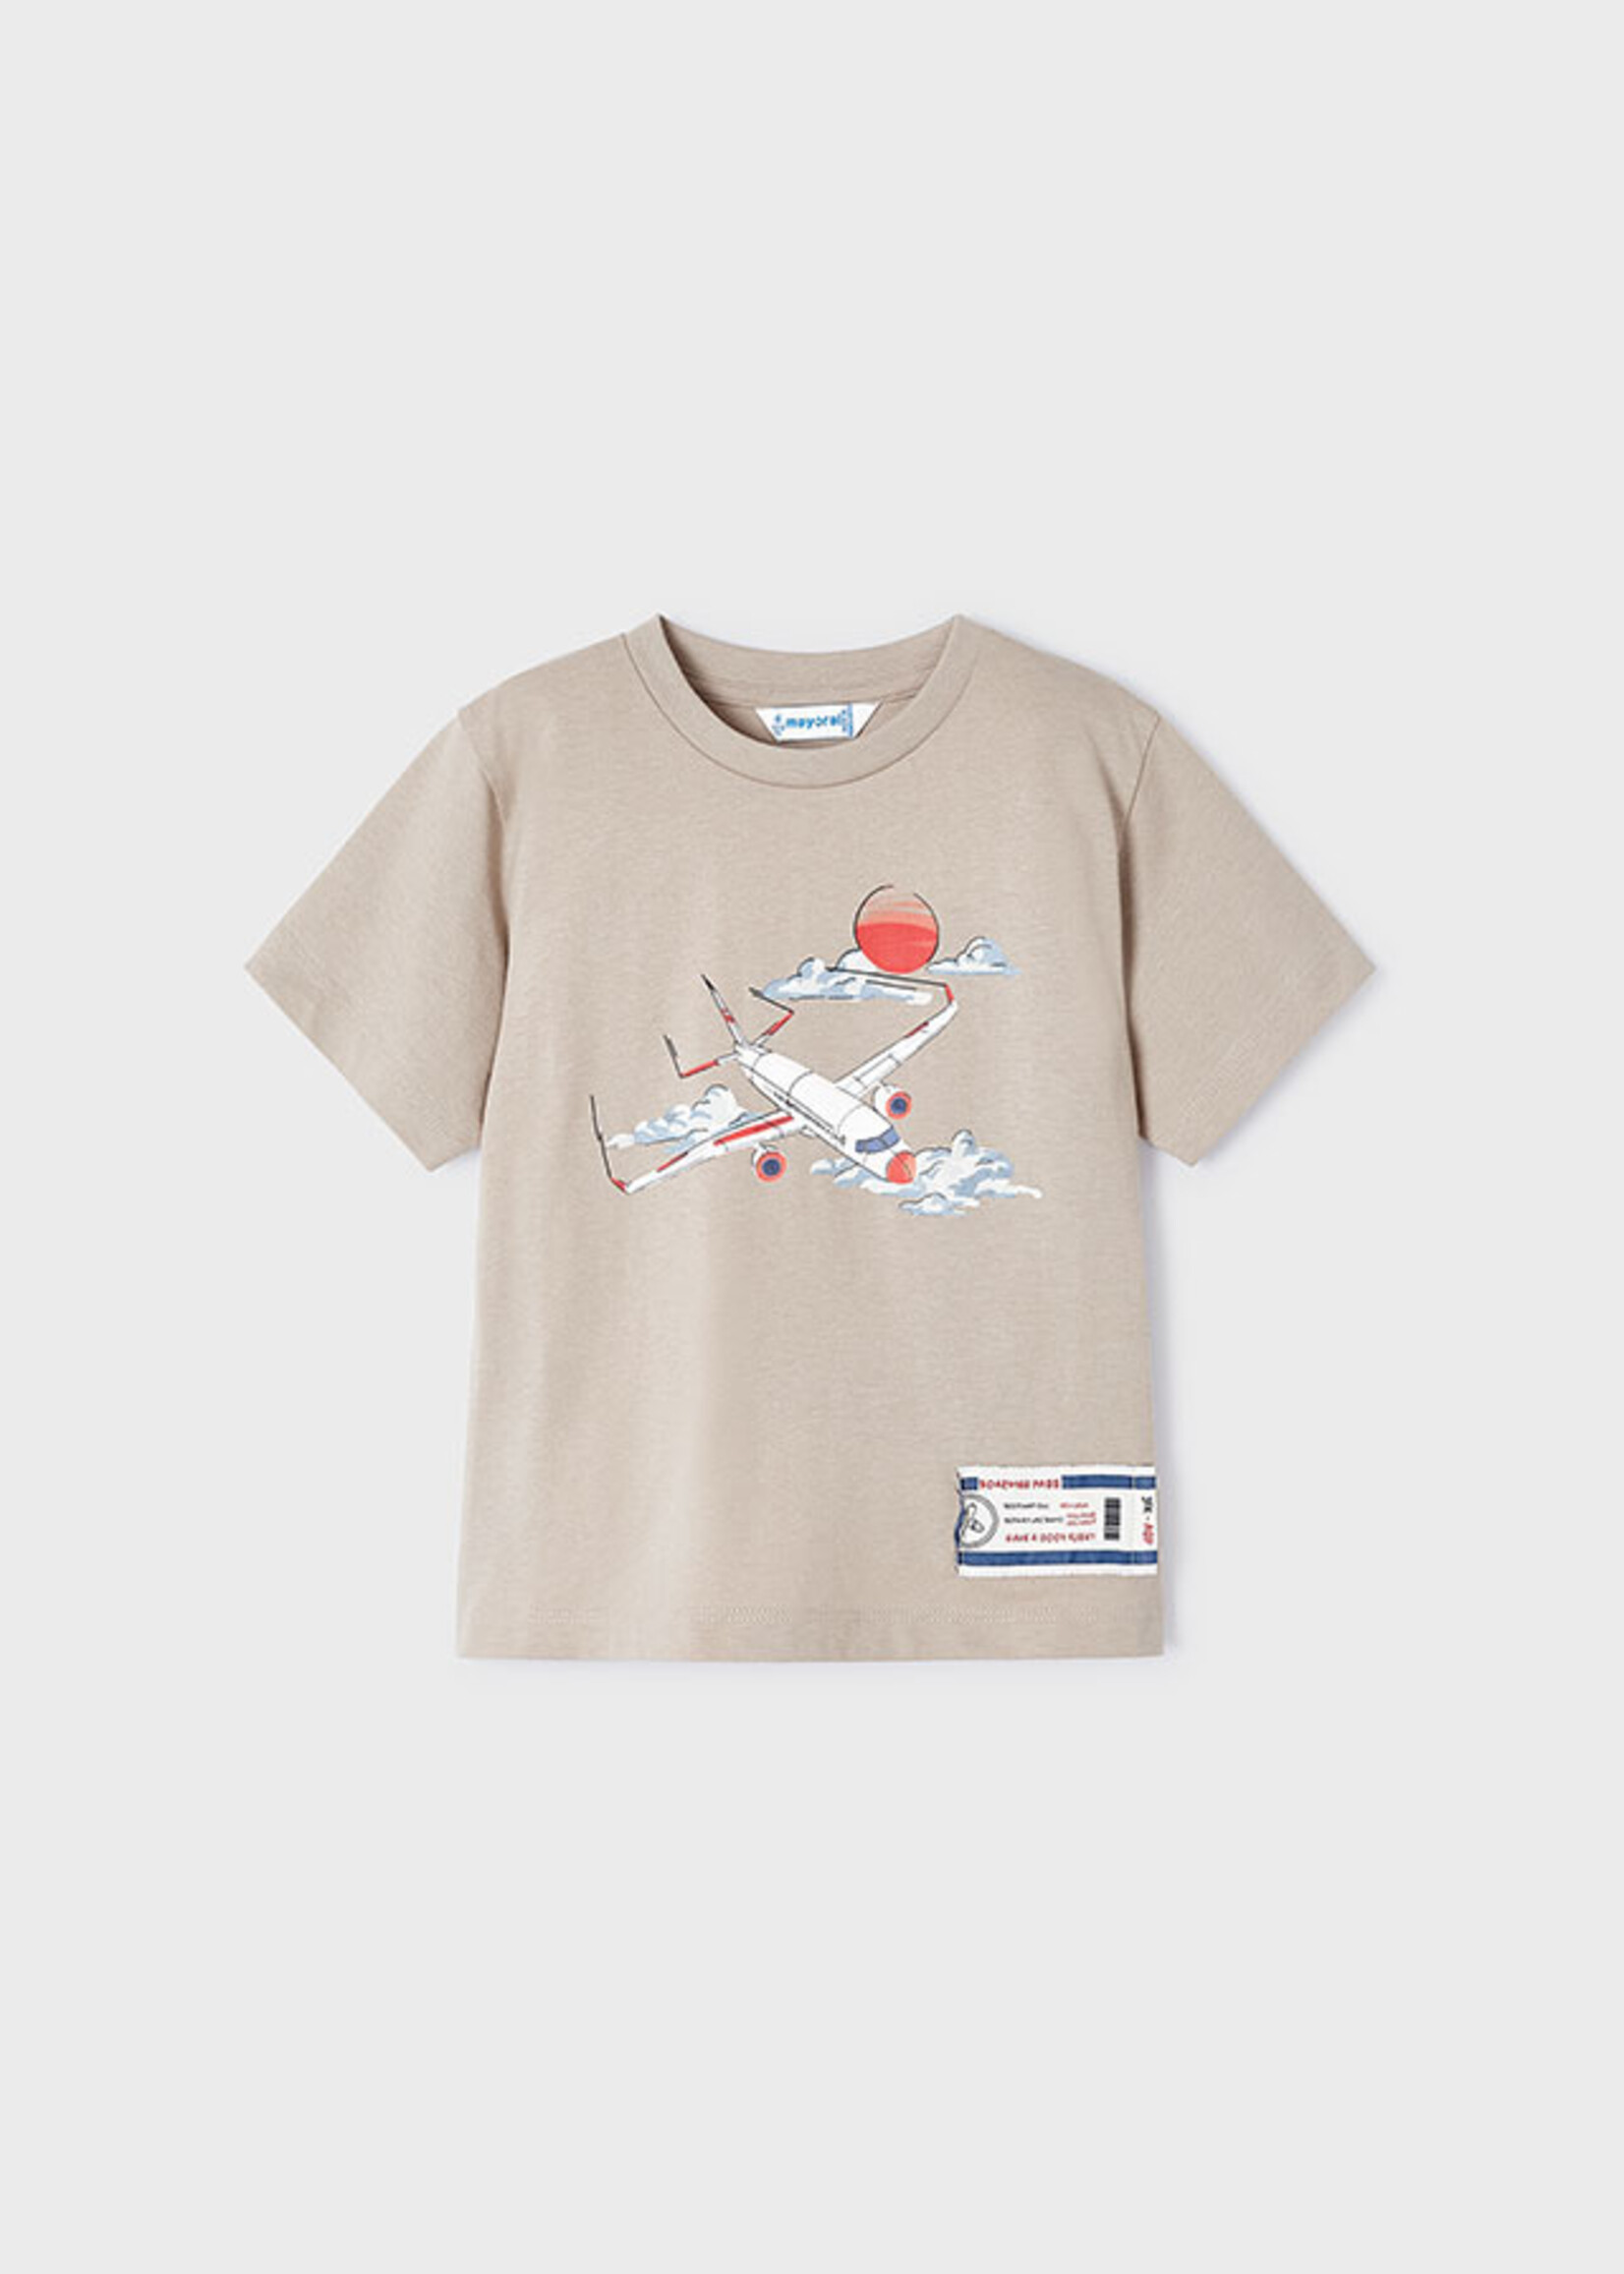 Mayoral Mini Boy             3020 S/s t-shirt                   Sesame